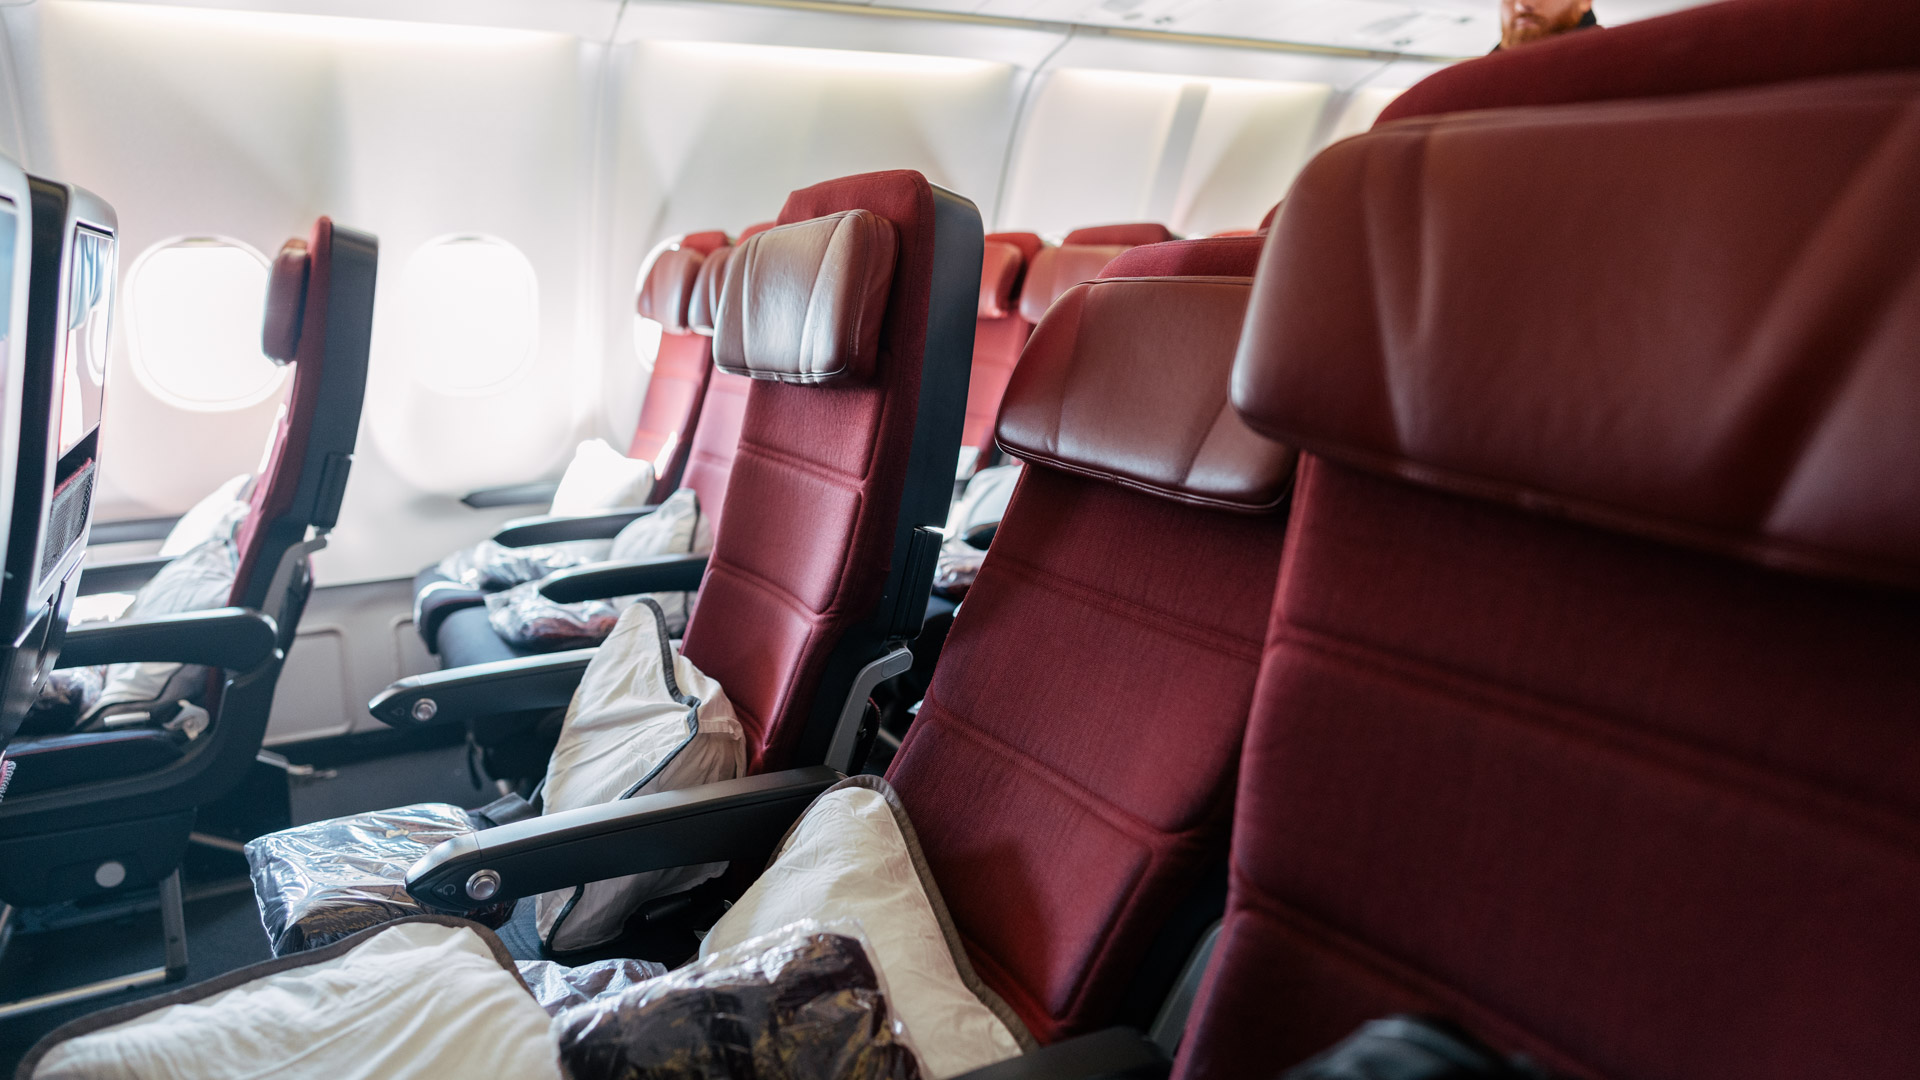 Qantas Airbus A330 Economy Class seating recline